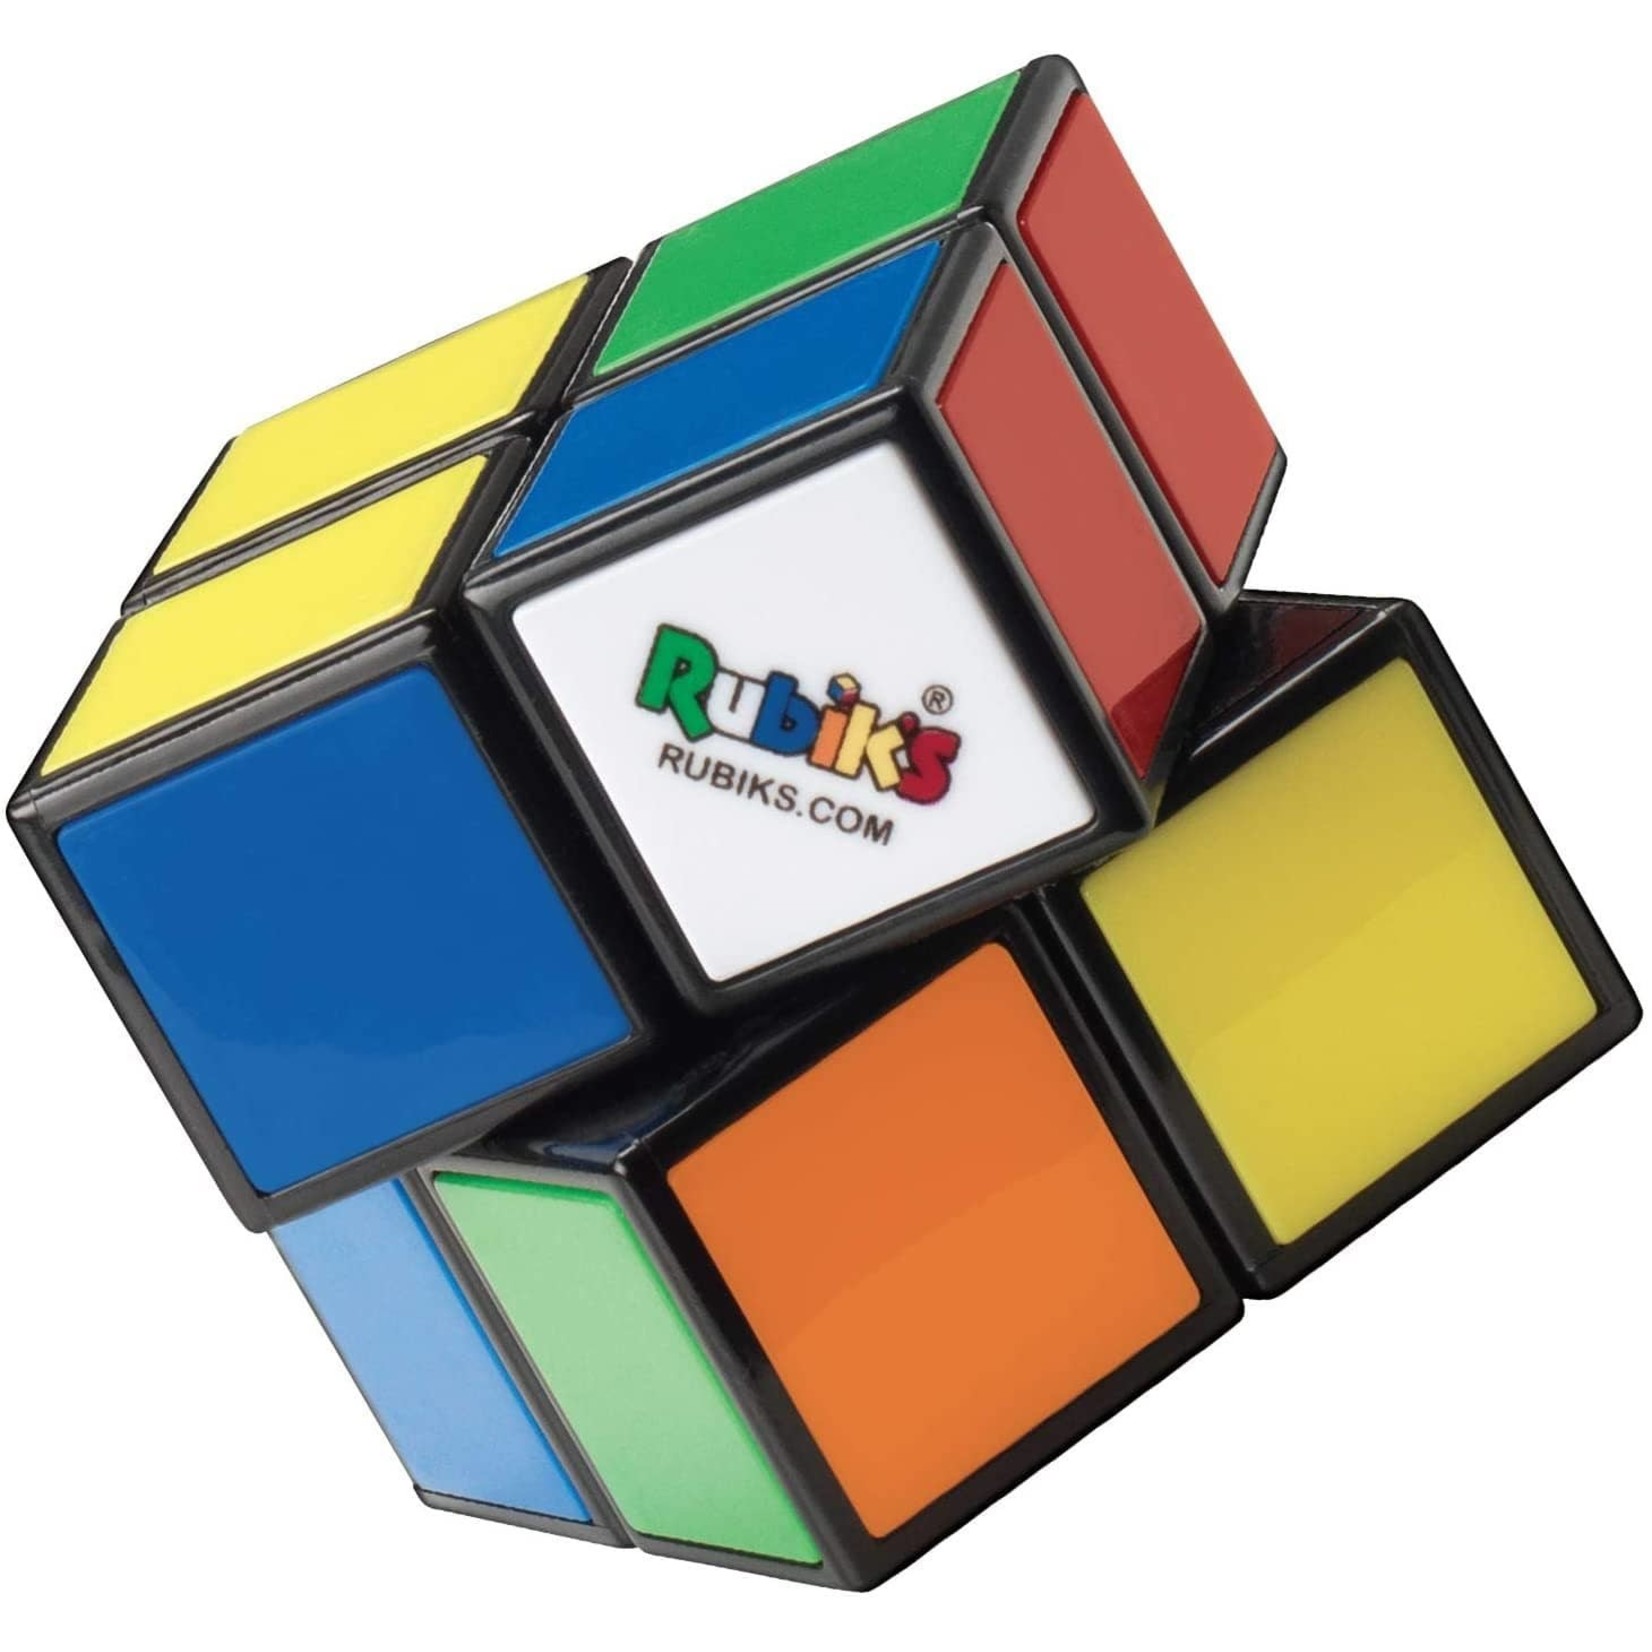 Spinmaster Rubik's 2x2 Mini